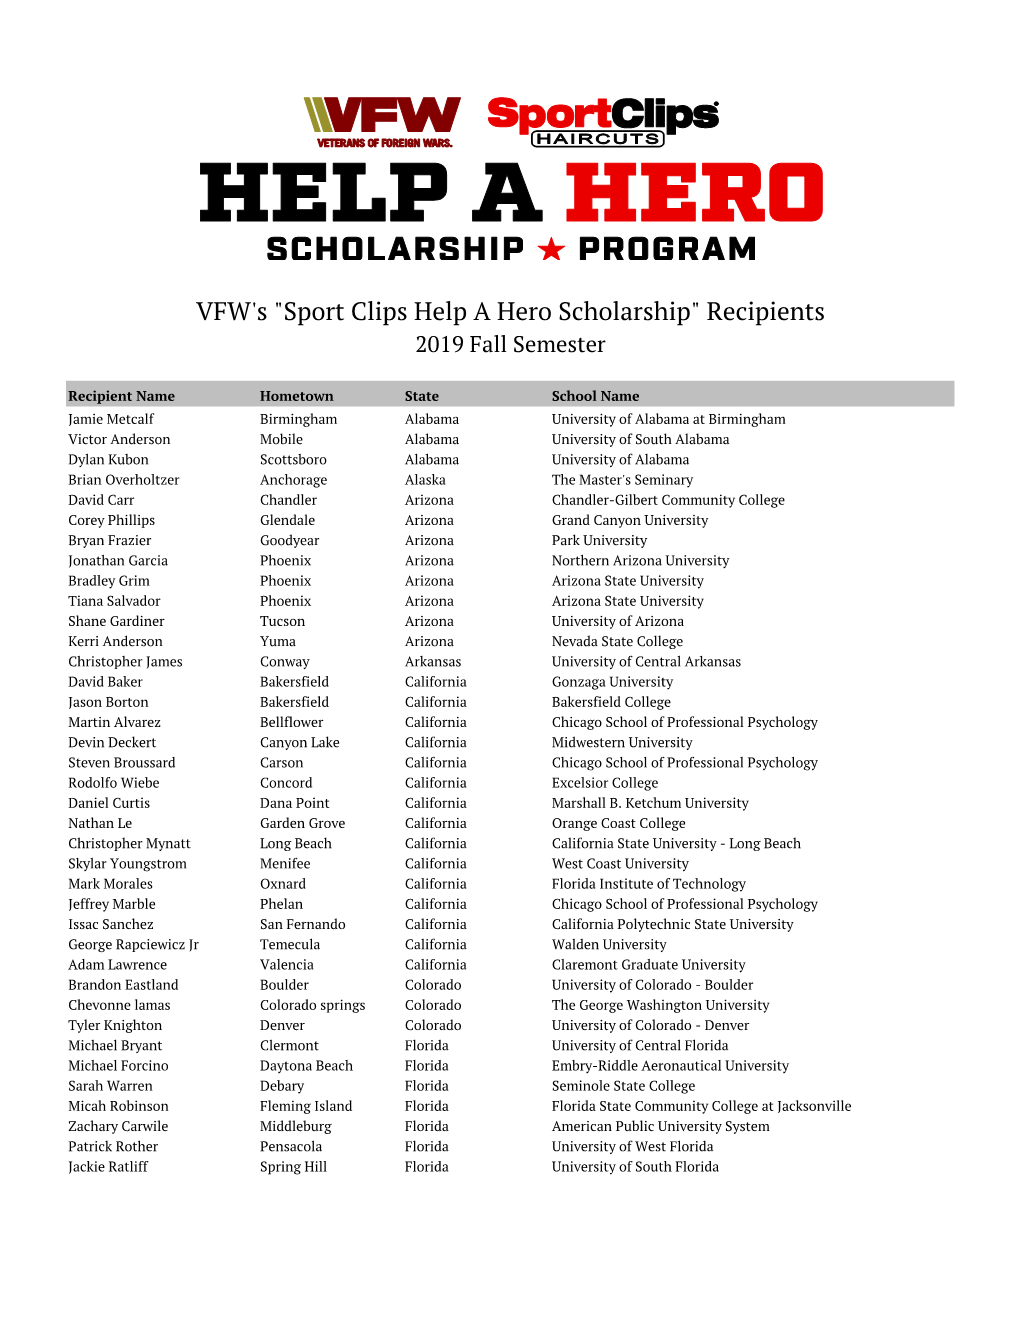 VFW's "Sport Clips Help a Hero Scholarship" Recipients 2019 Fall Semester